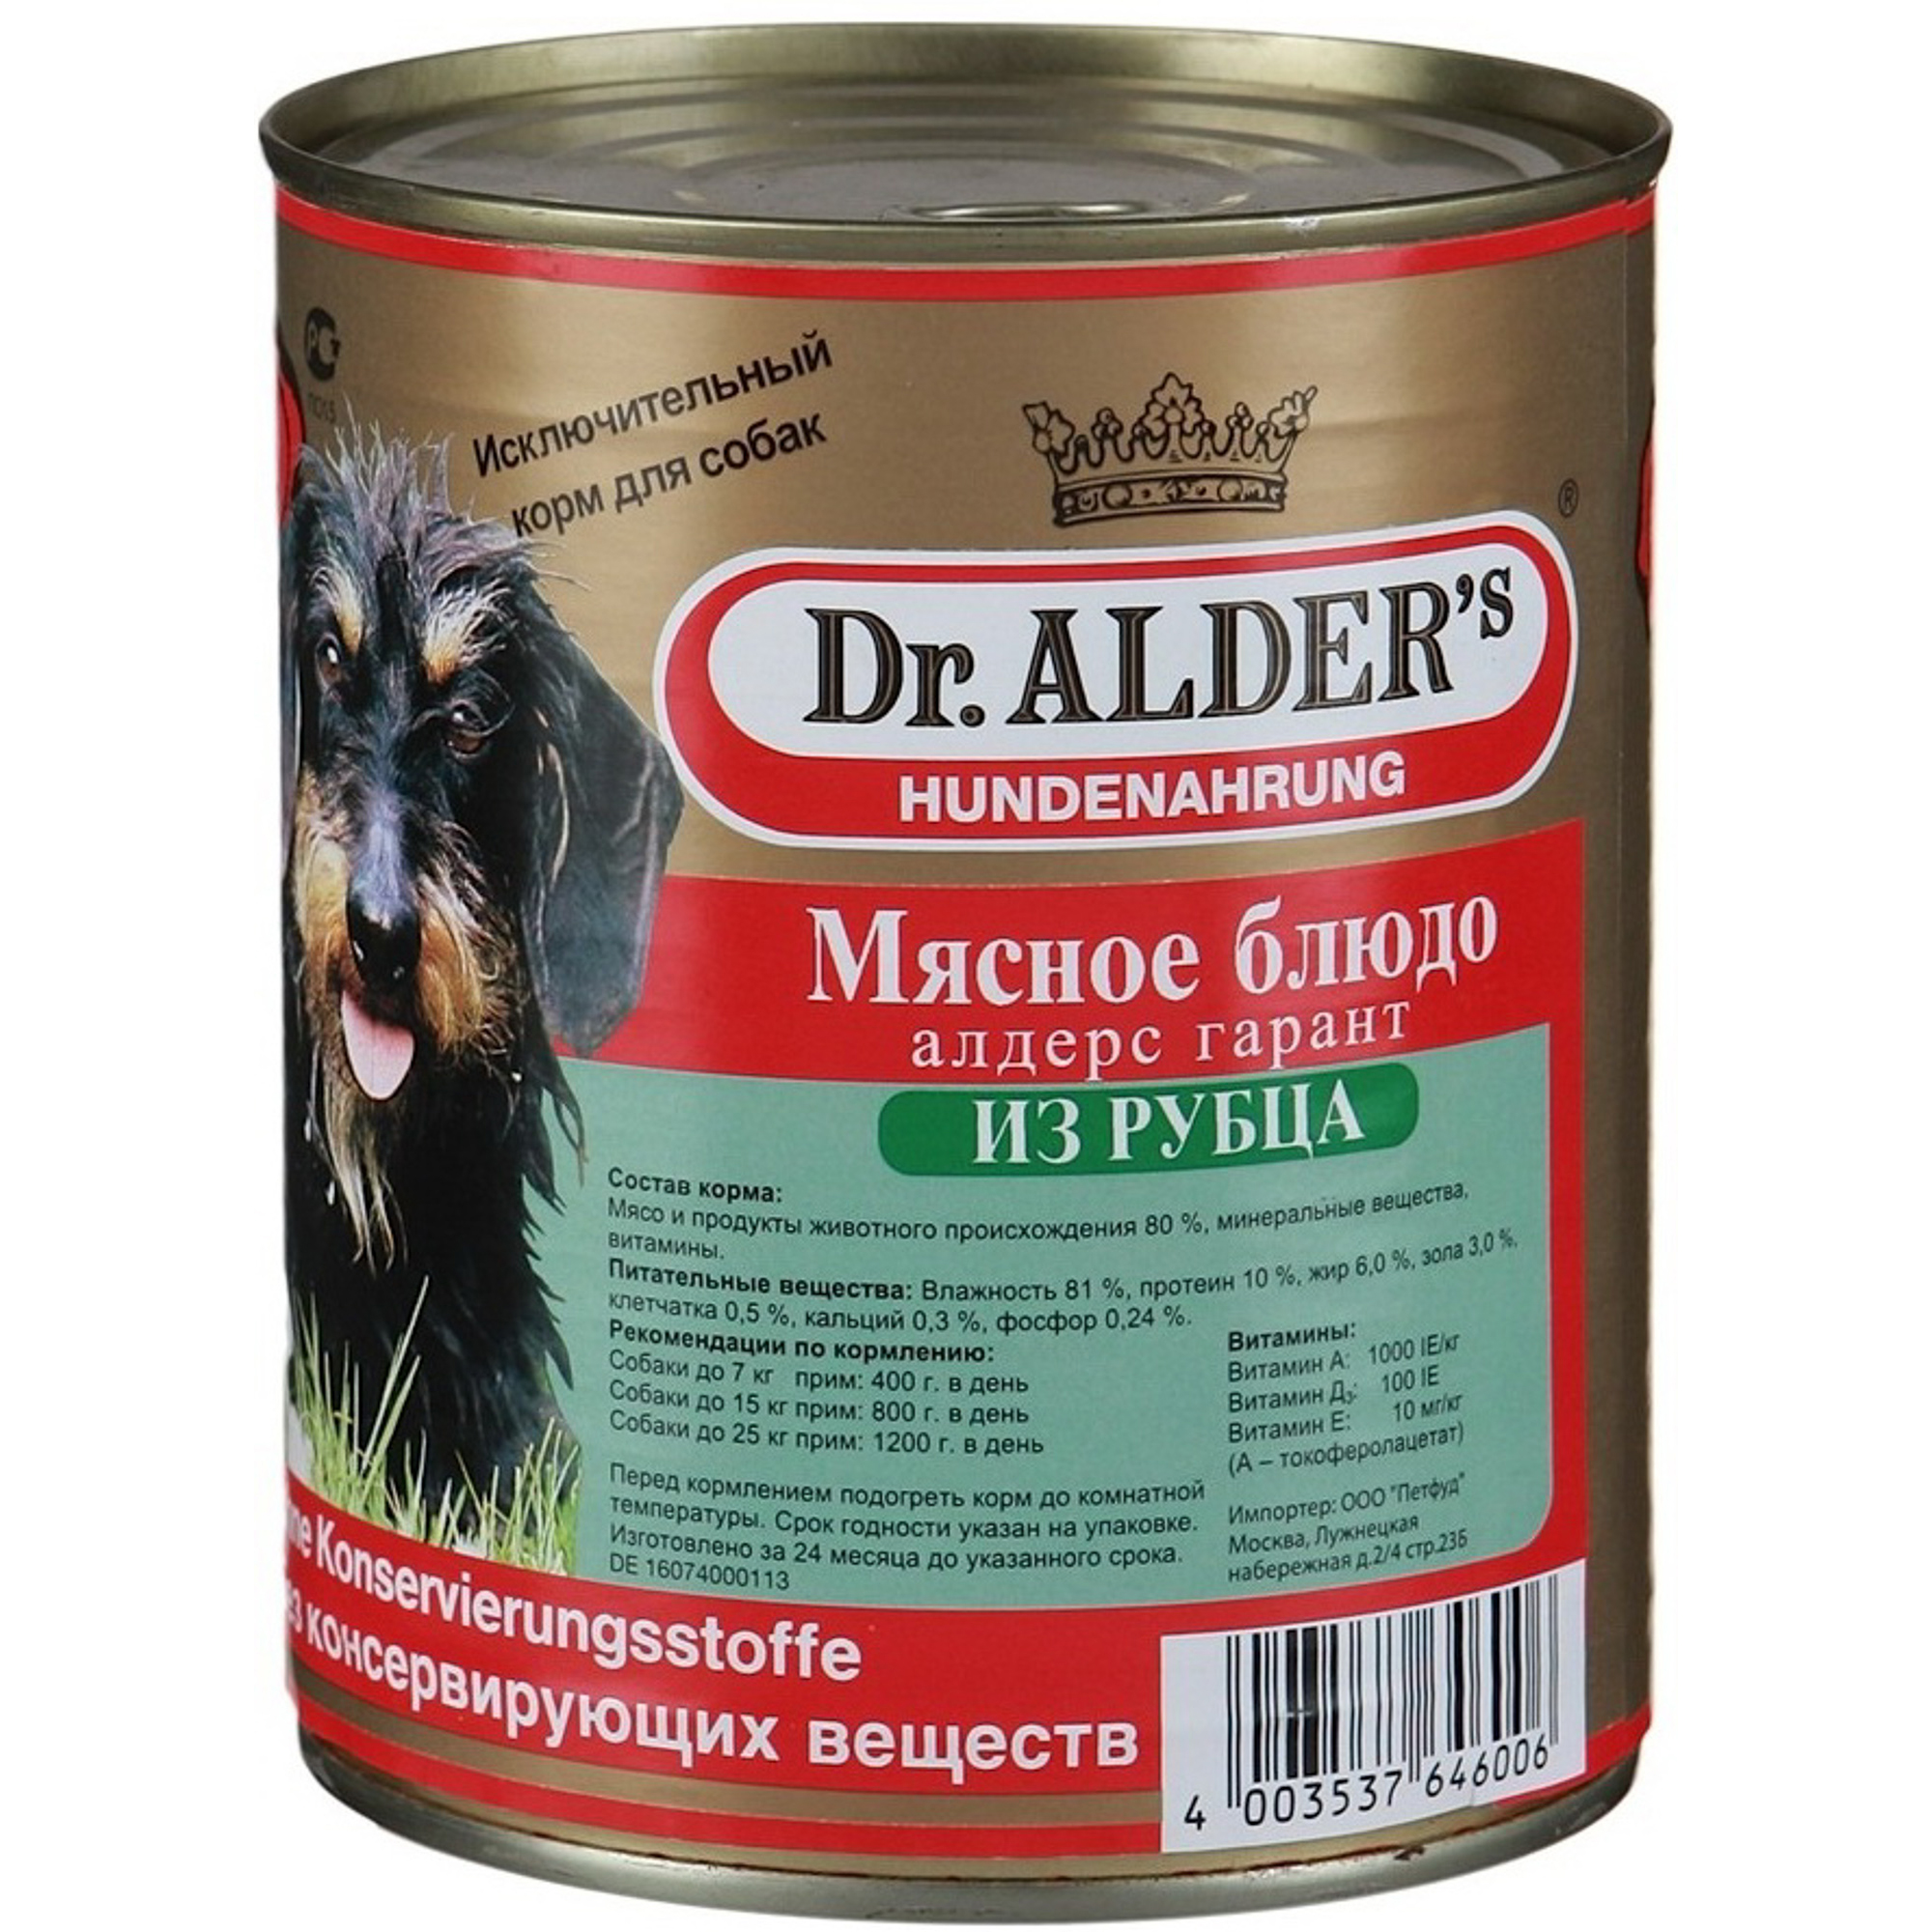 Корм для собак Dr. Alder's Алдерс Гарант 80% рубленного мяса рубец, сердце 750 г корм для собак dr alder s алдерс гарант 80% рубленного мяса рубец сердце 750 г